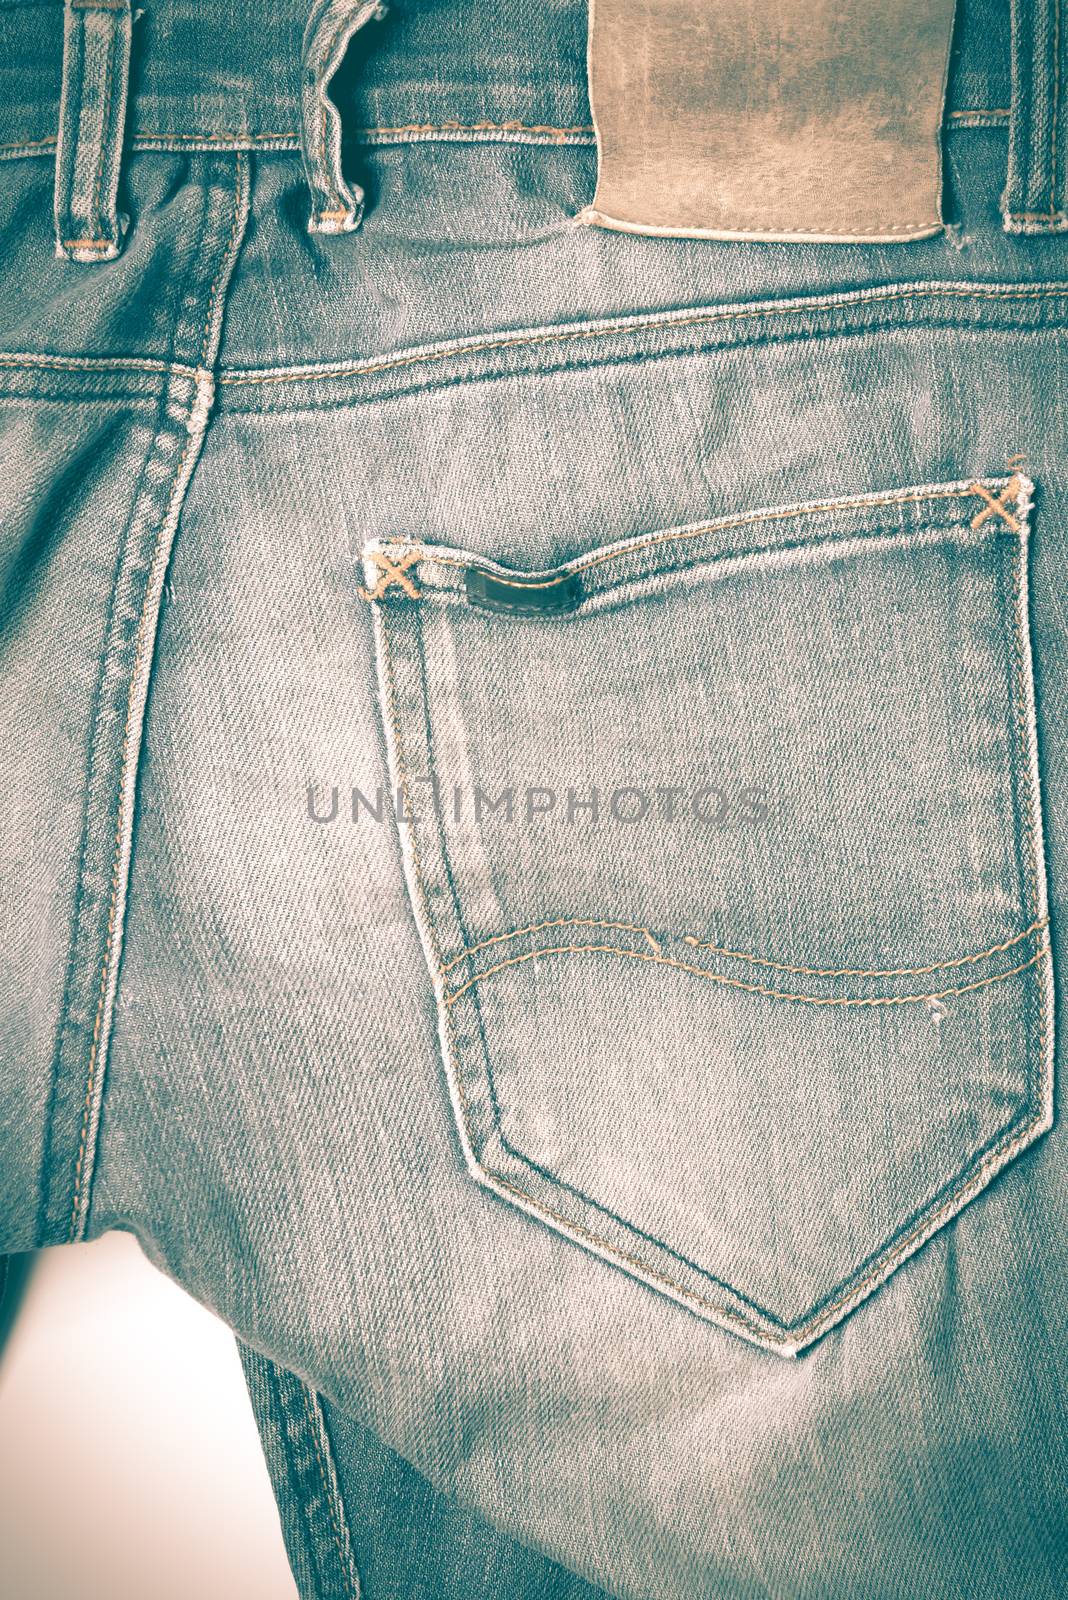 label on jean pants retro vintage style by ammza12